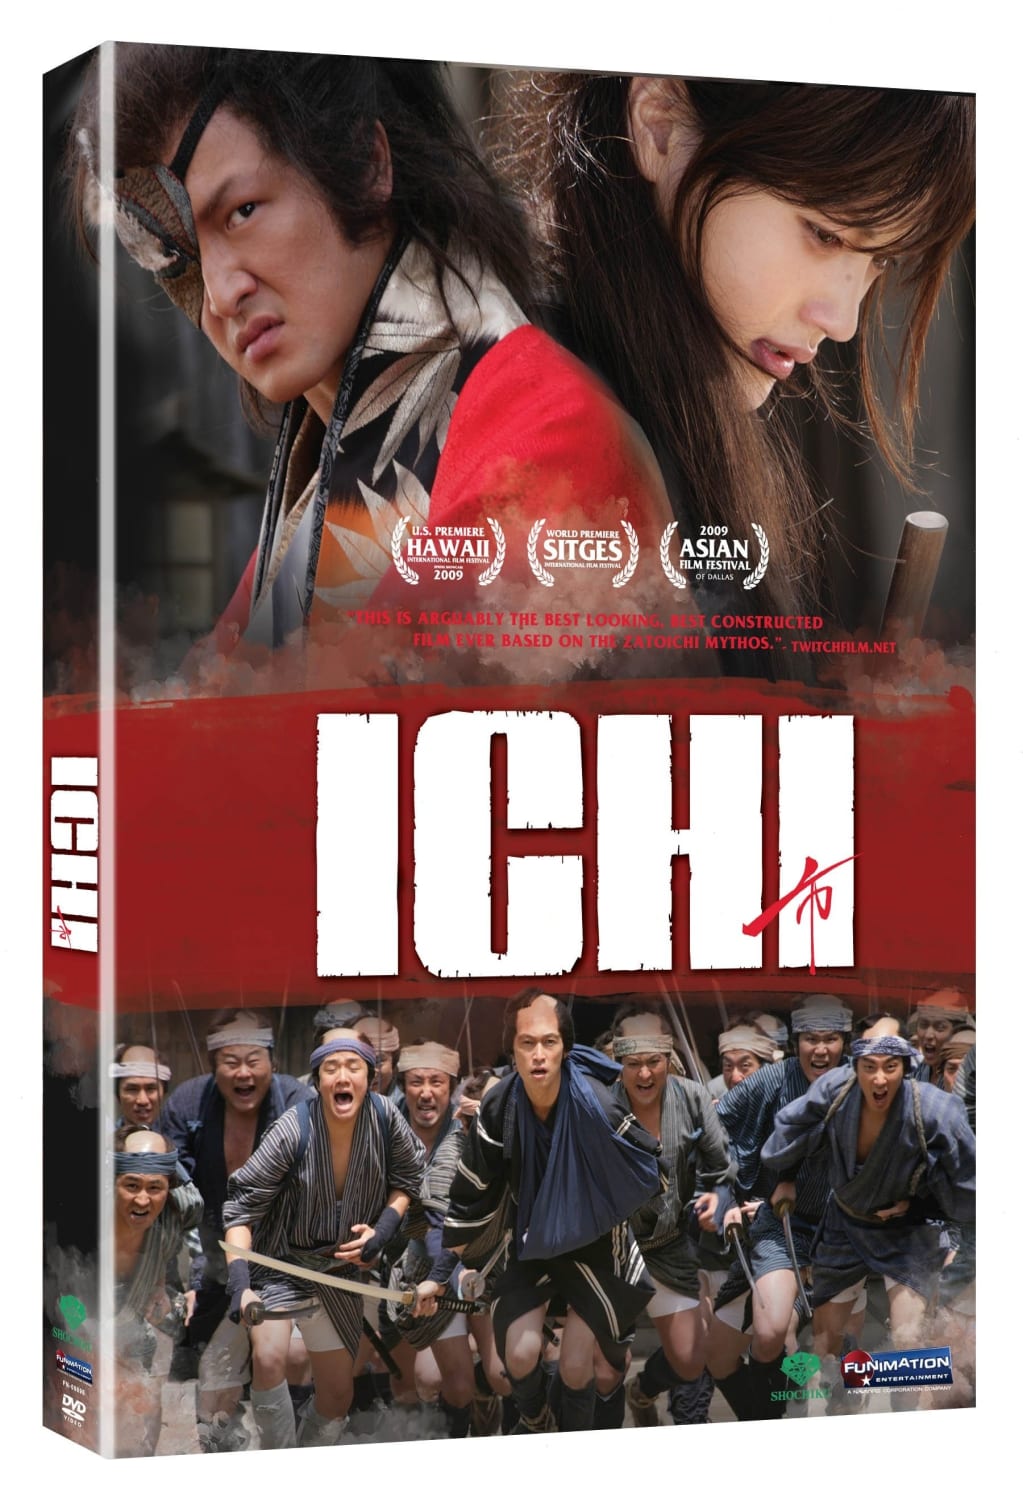 ICHI: The Movie (DVD) on MovieShack